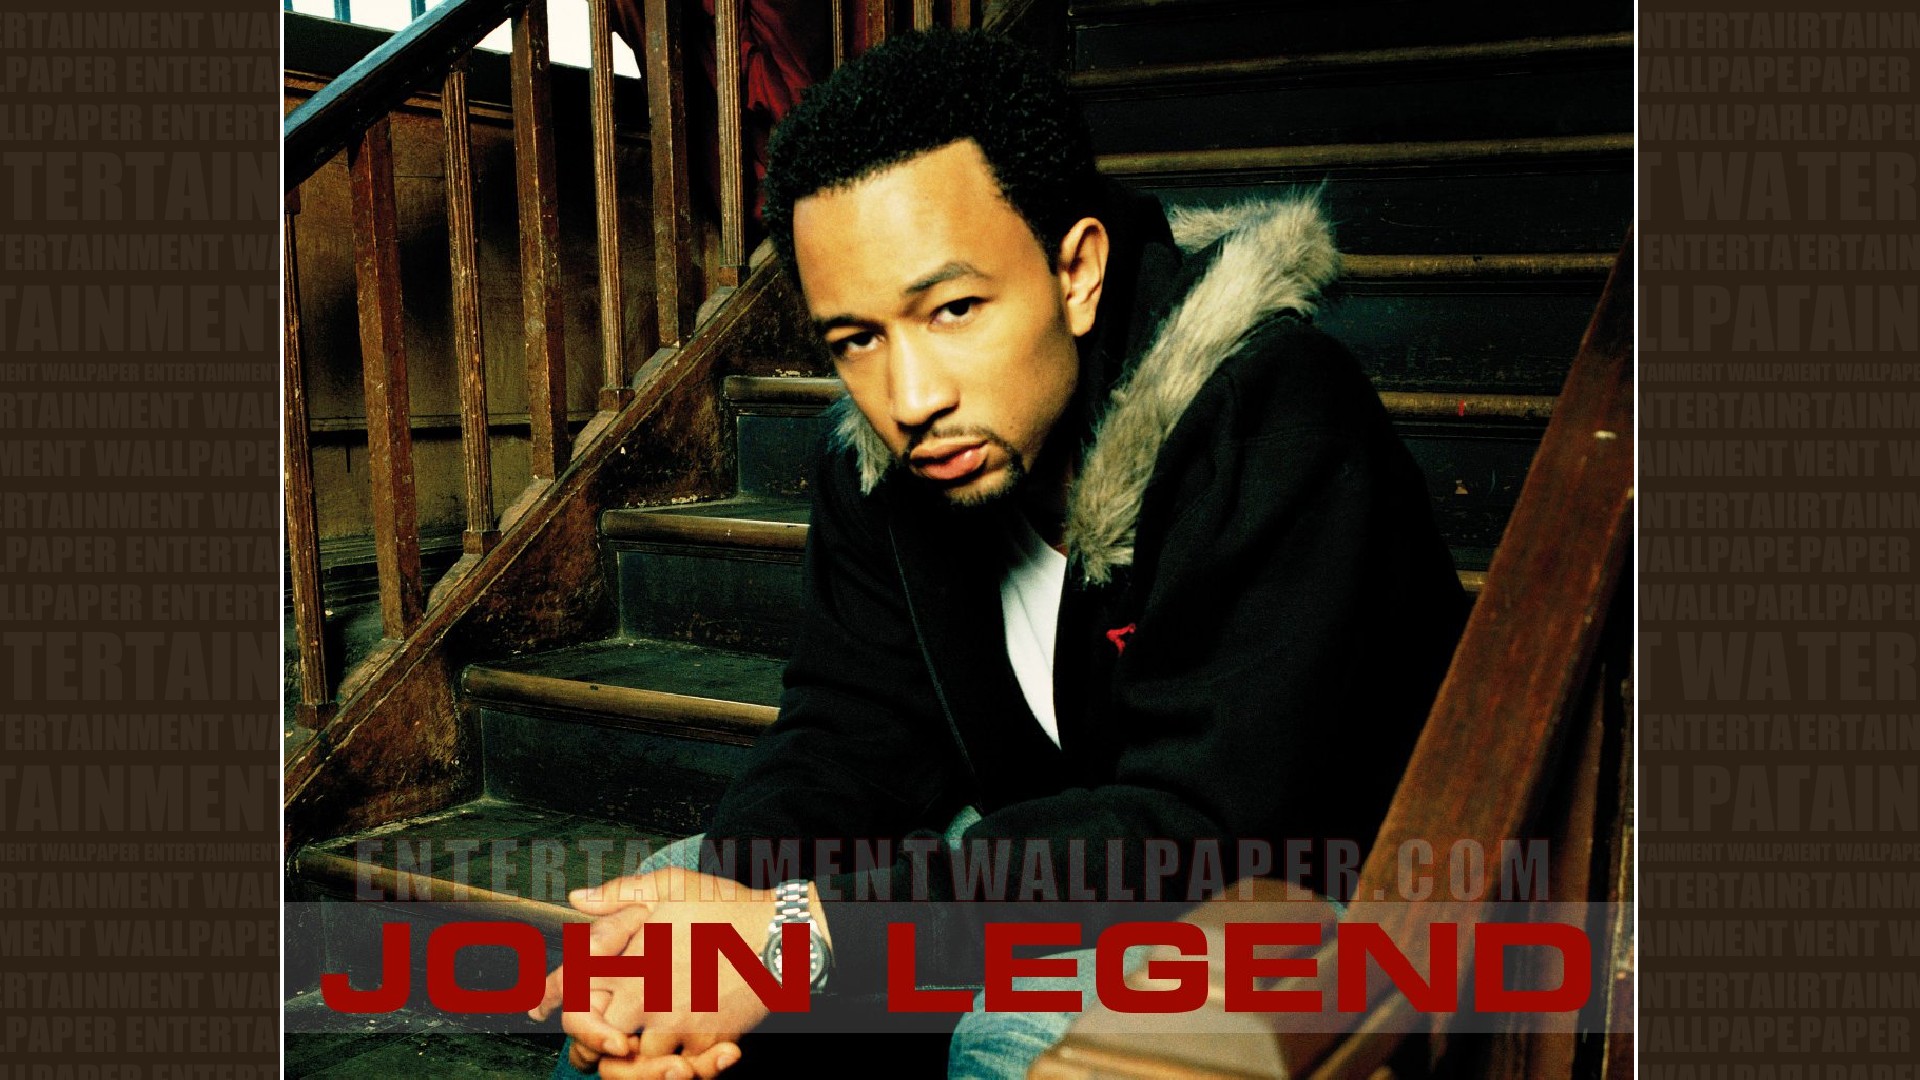 Classic R B Music Image John Legend HD Wallpaper And Background